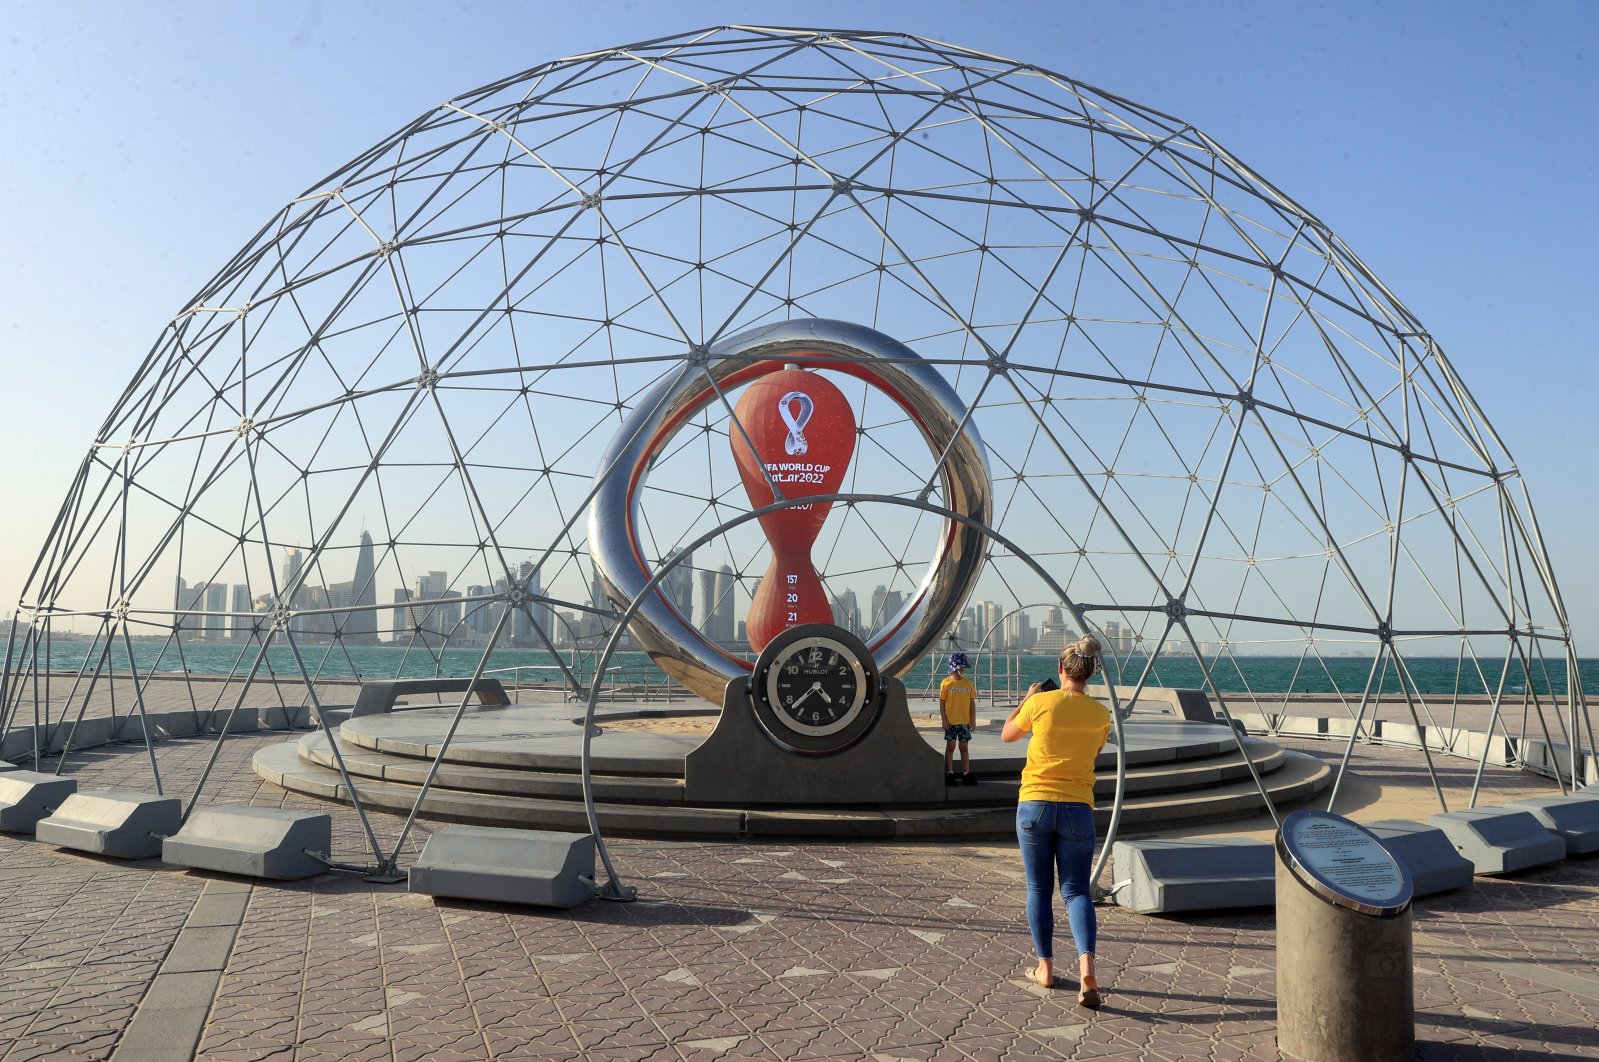 Tiket terakhir untuk Piala Dunia FIFA di Qatar mulai dijual minggu depan